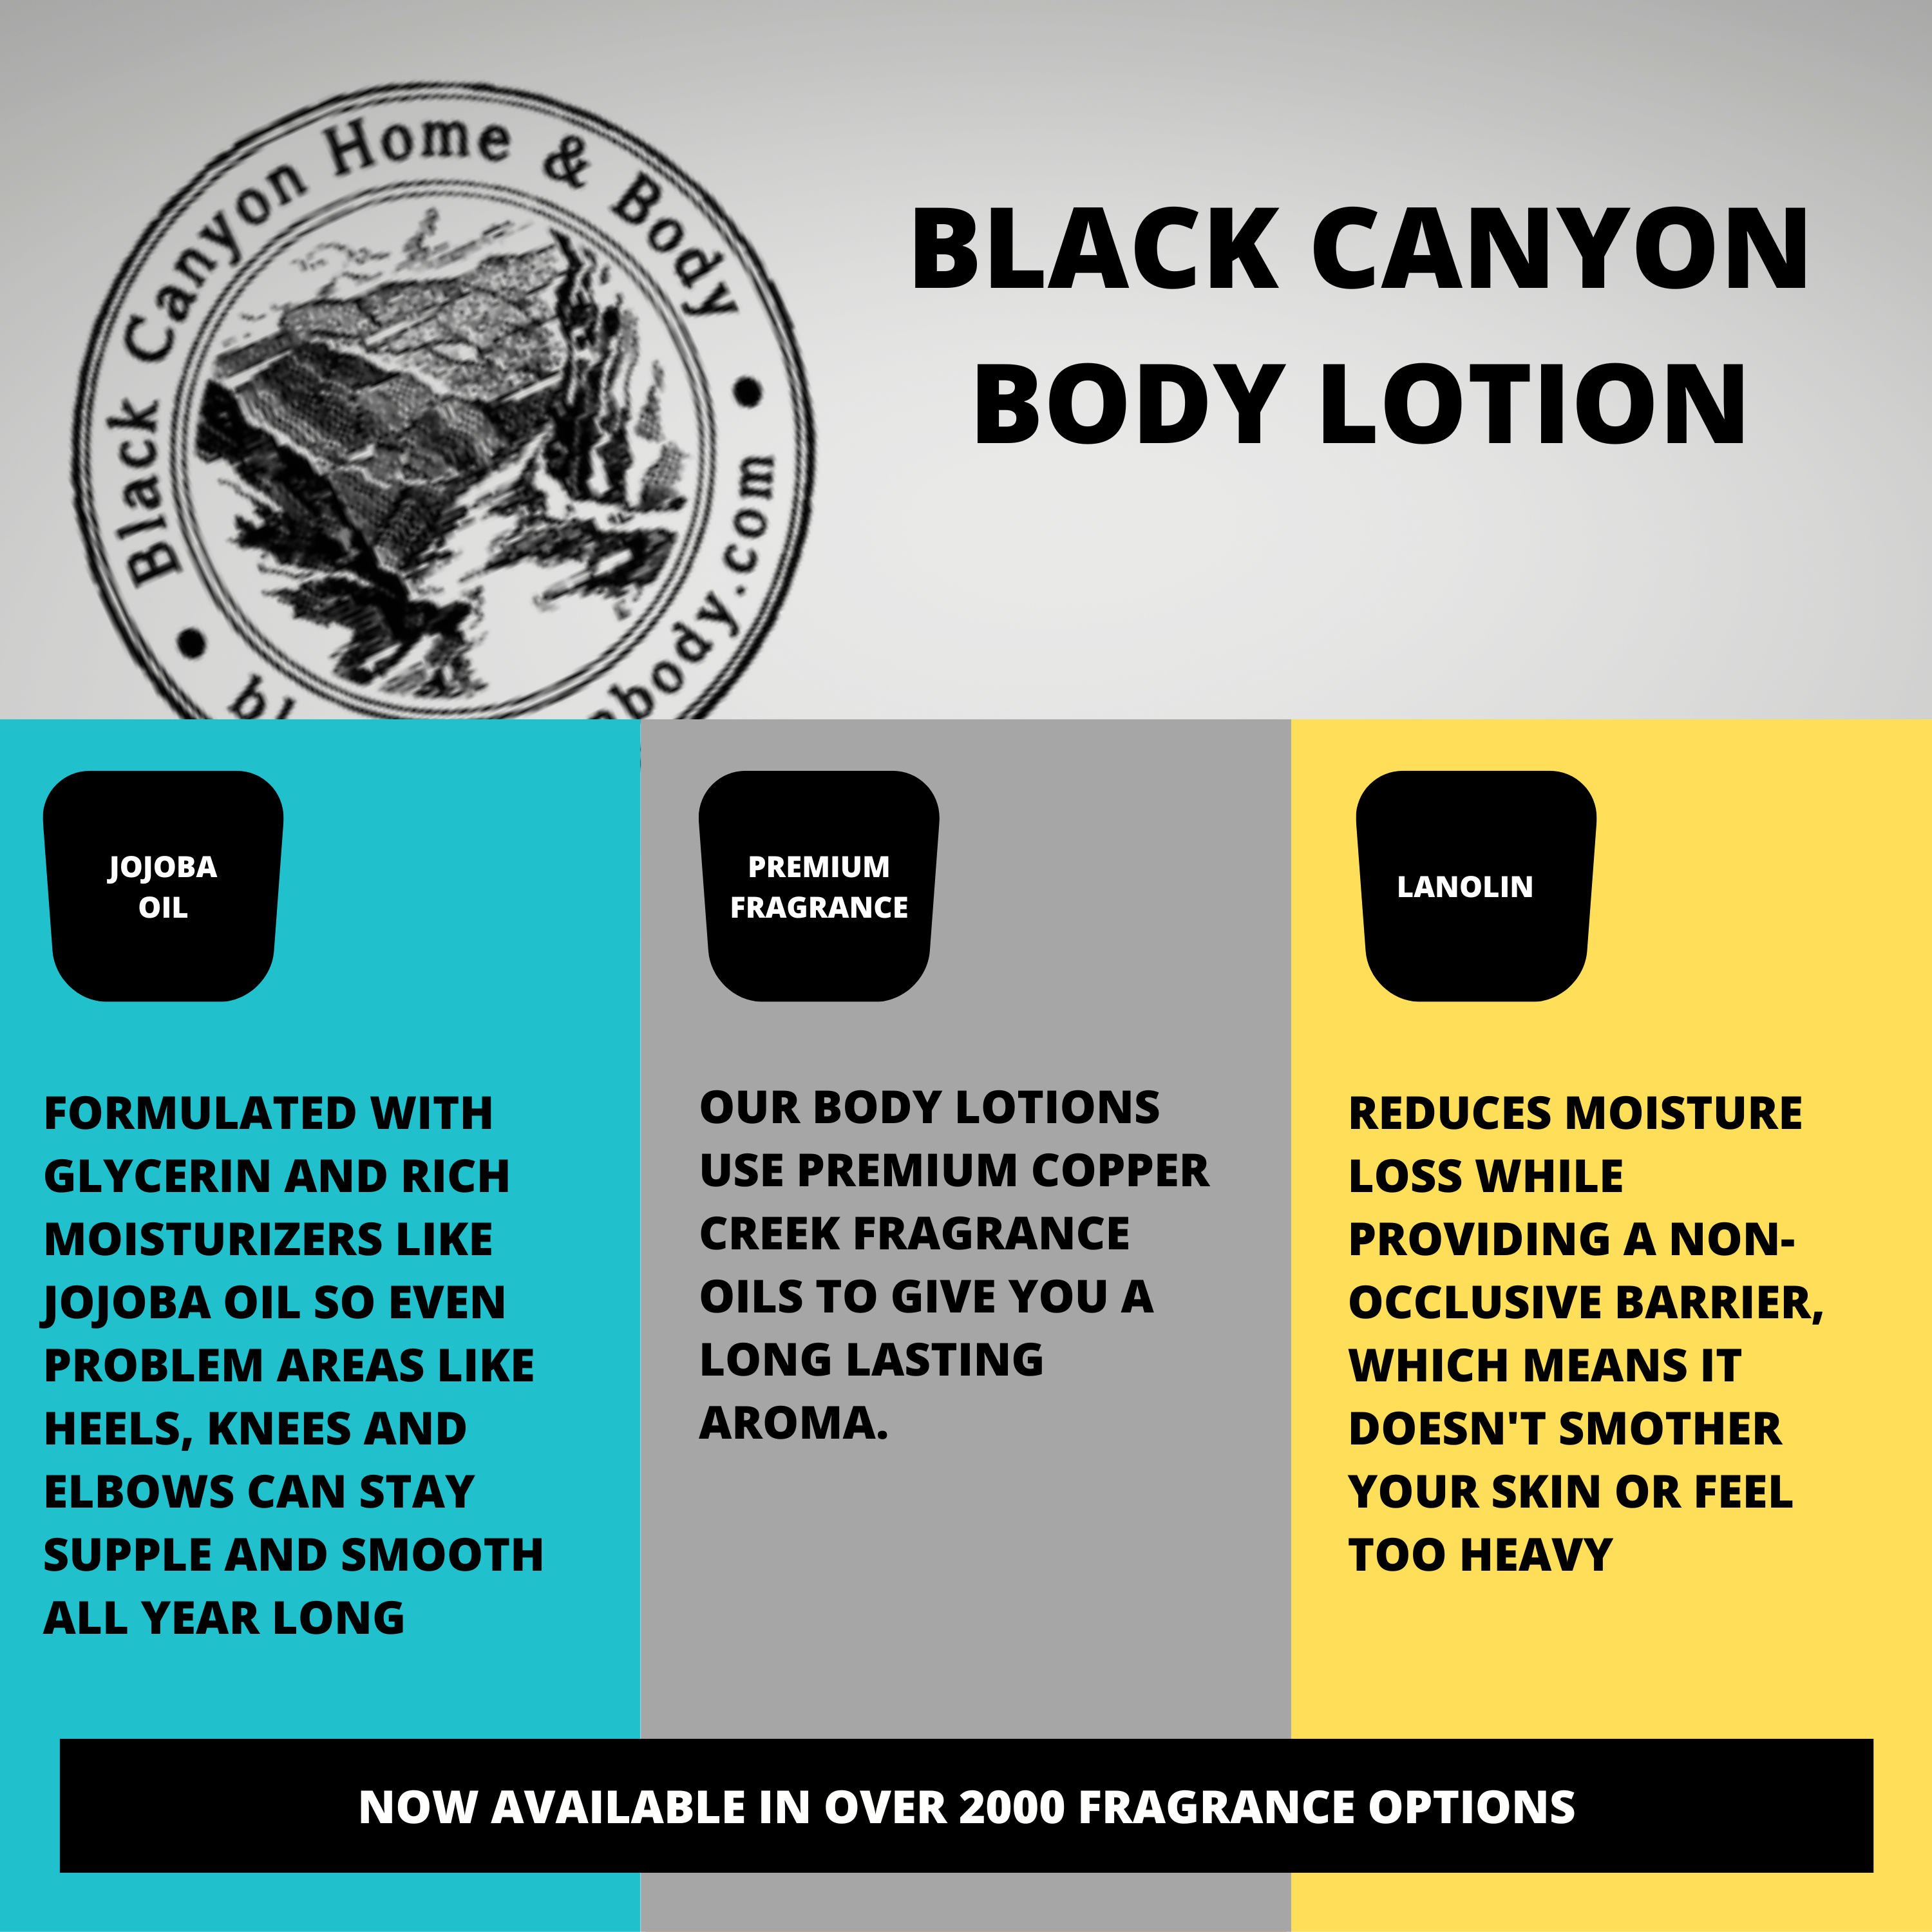 Black Canyon Bergamot & Fig Scented Luxury Body Lotion with Lanolin and Jojoba Oil